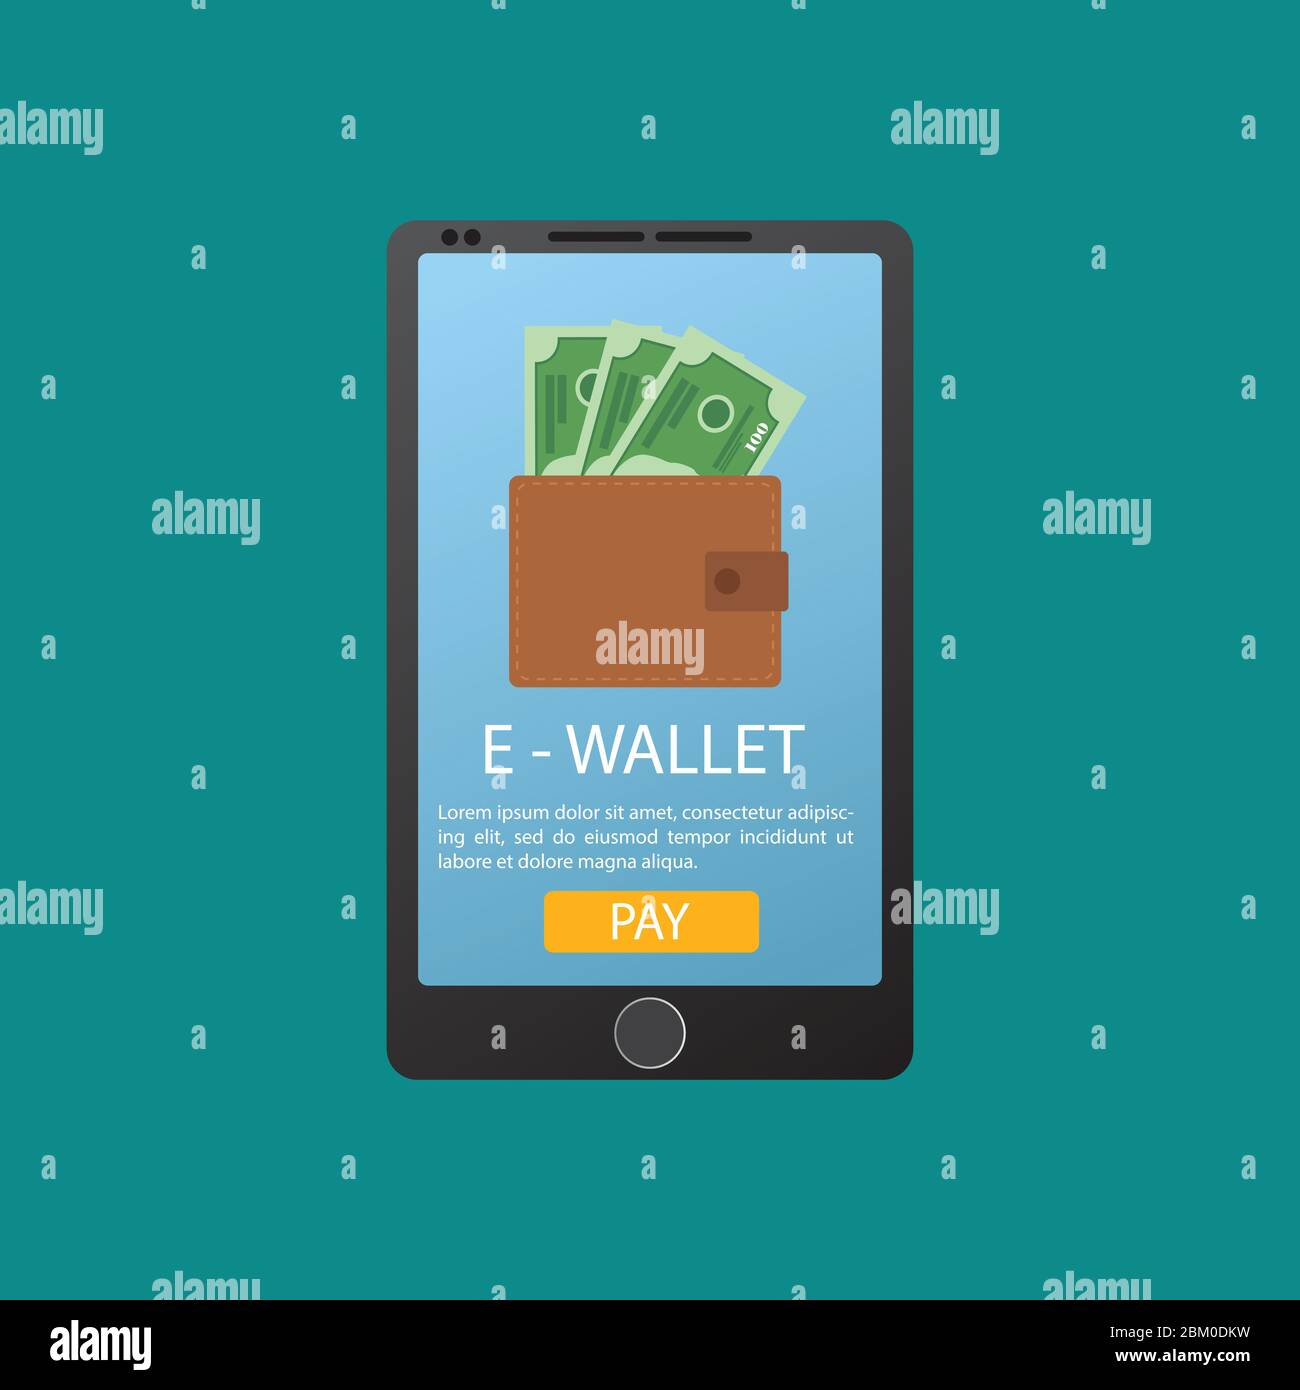 Online wallet concept. Vector illustration in flat design. Stock Vector